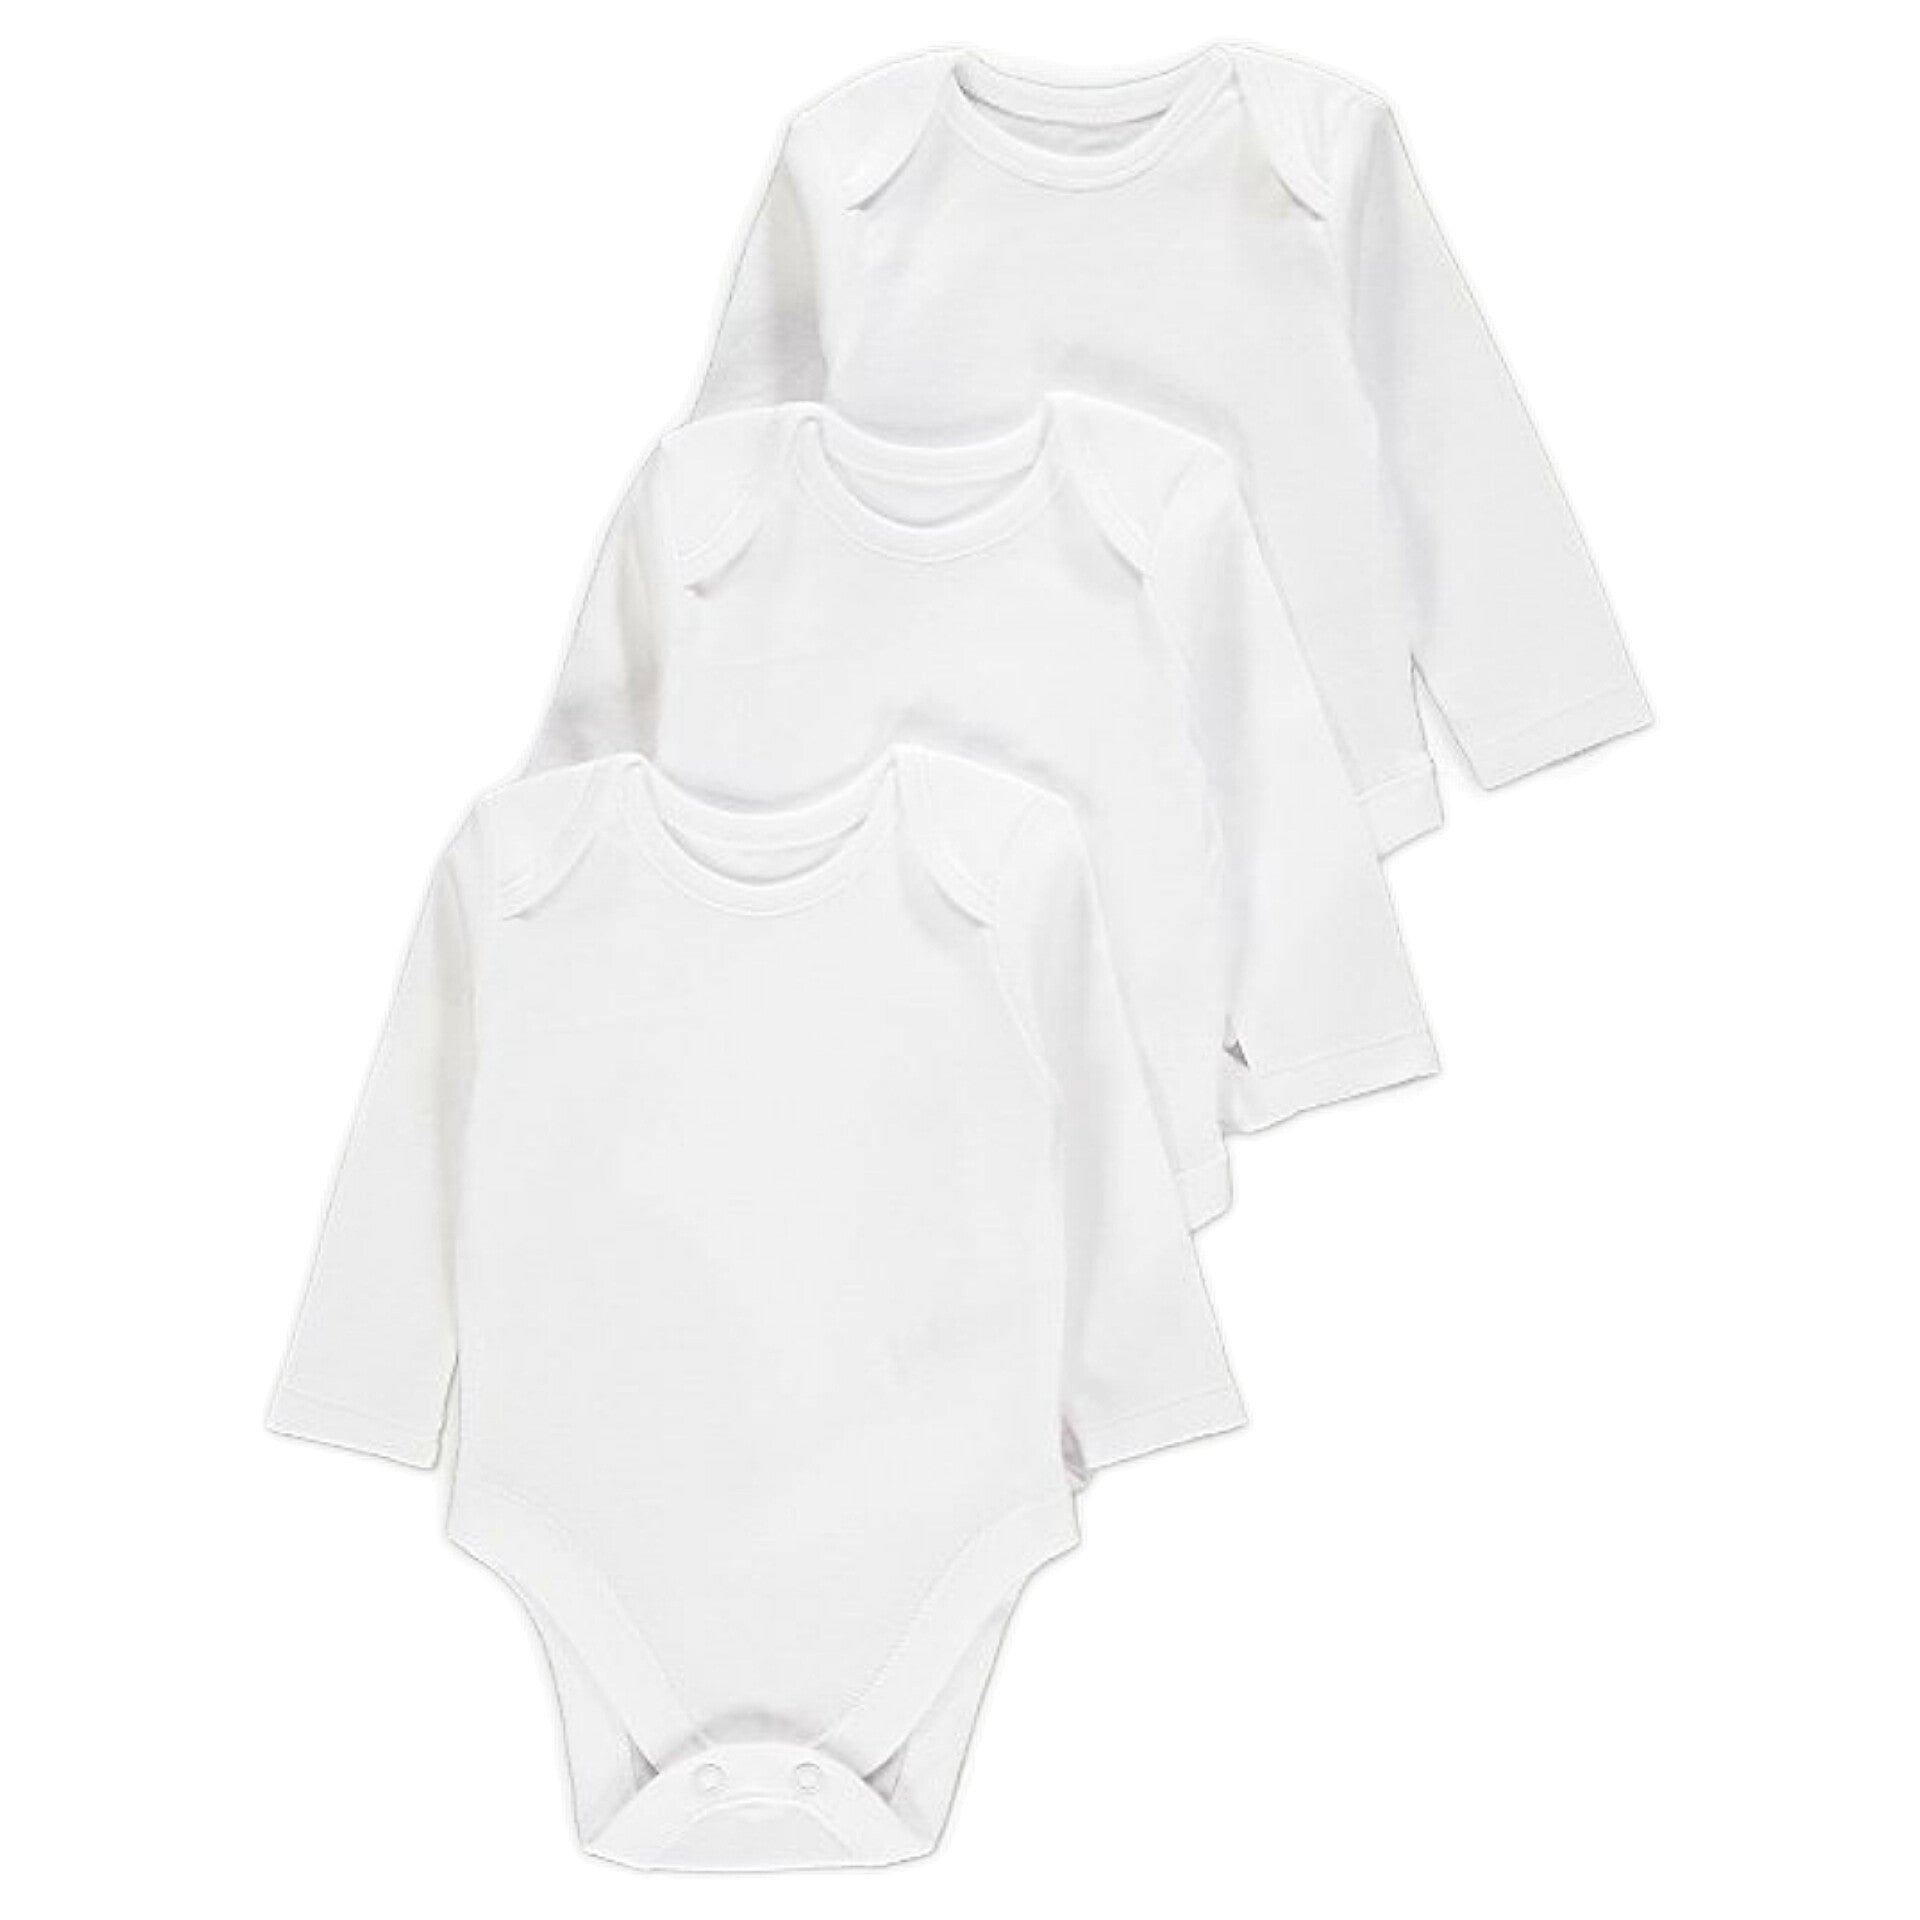 White Long Sleeve Bodysuits 3 Pack - Diaper Yard Gh